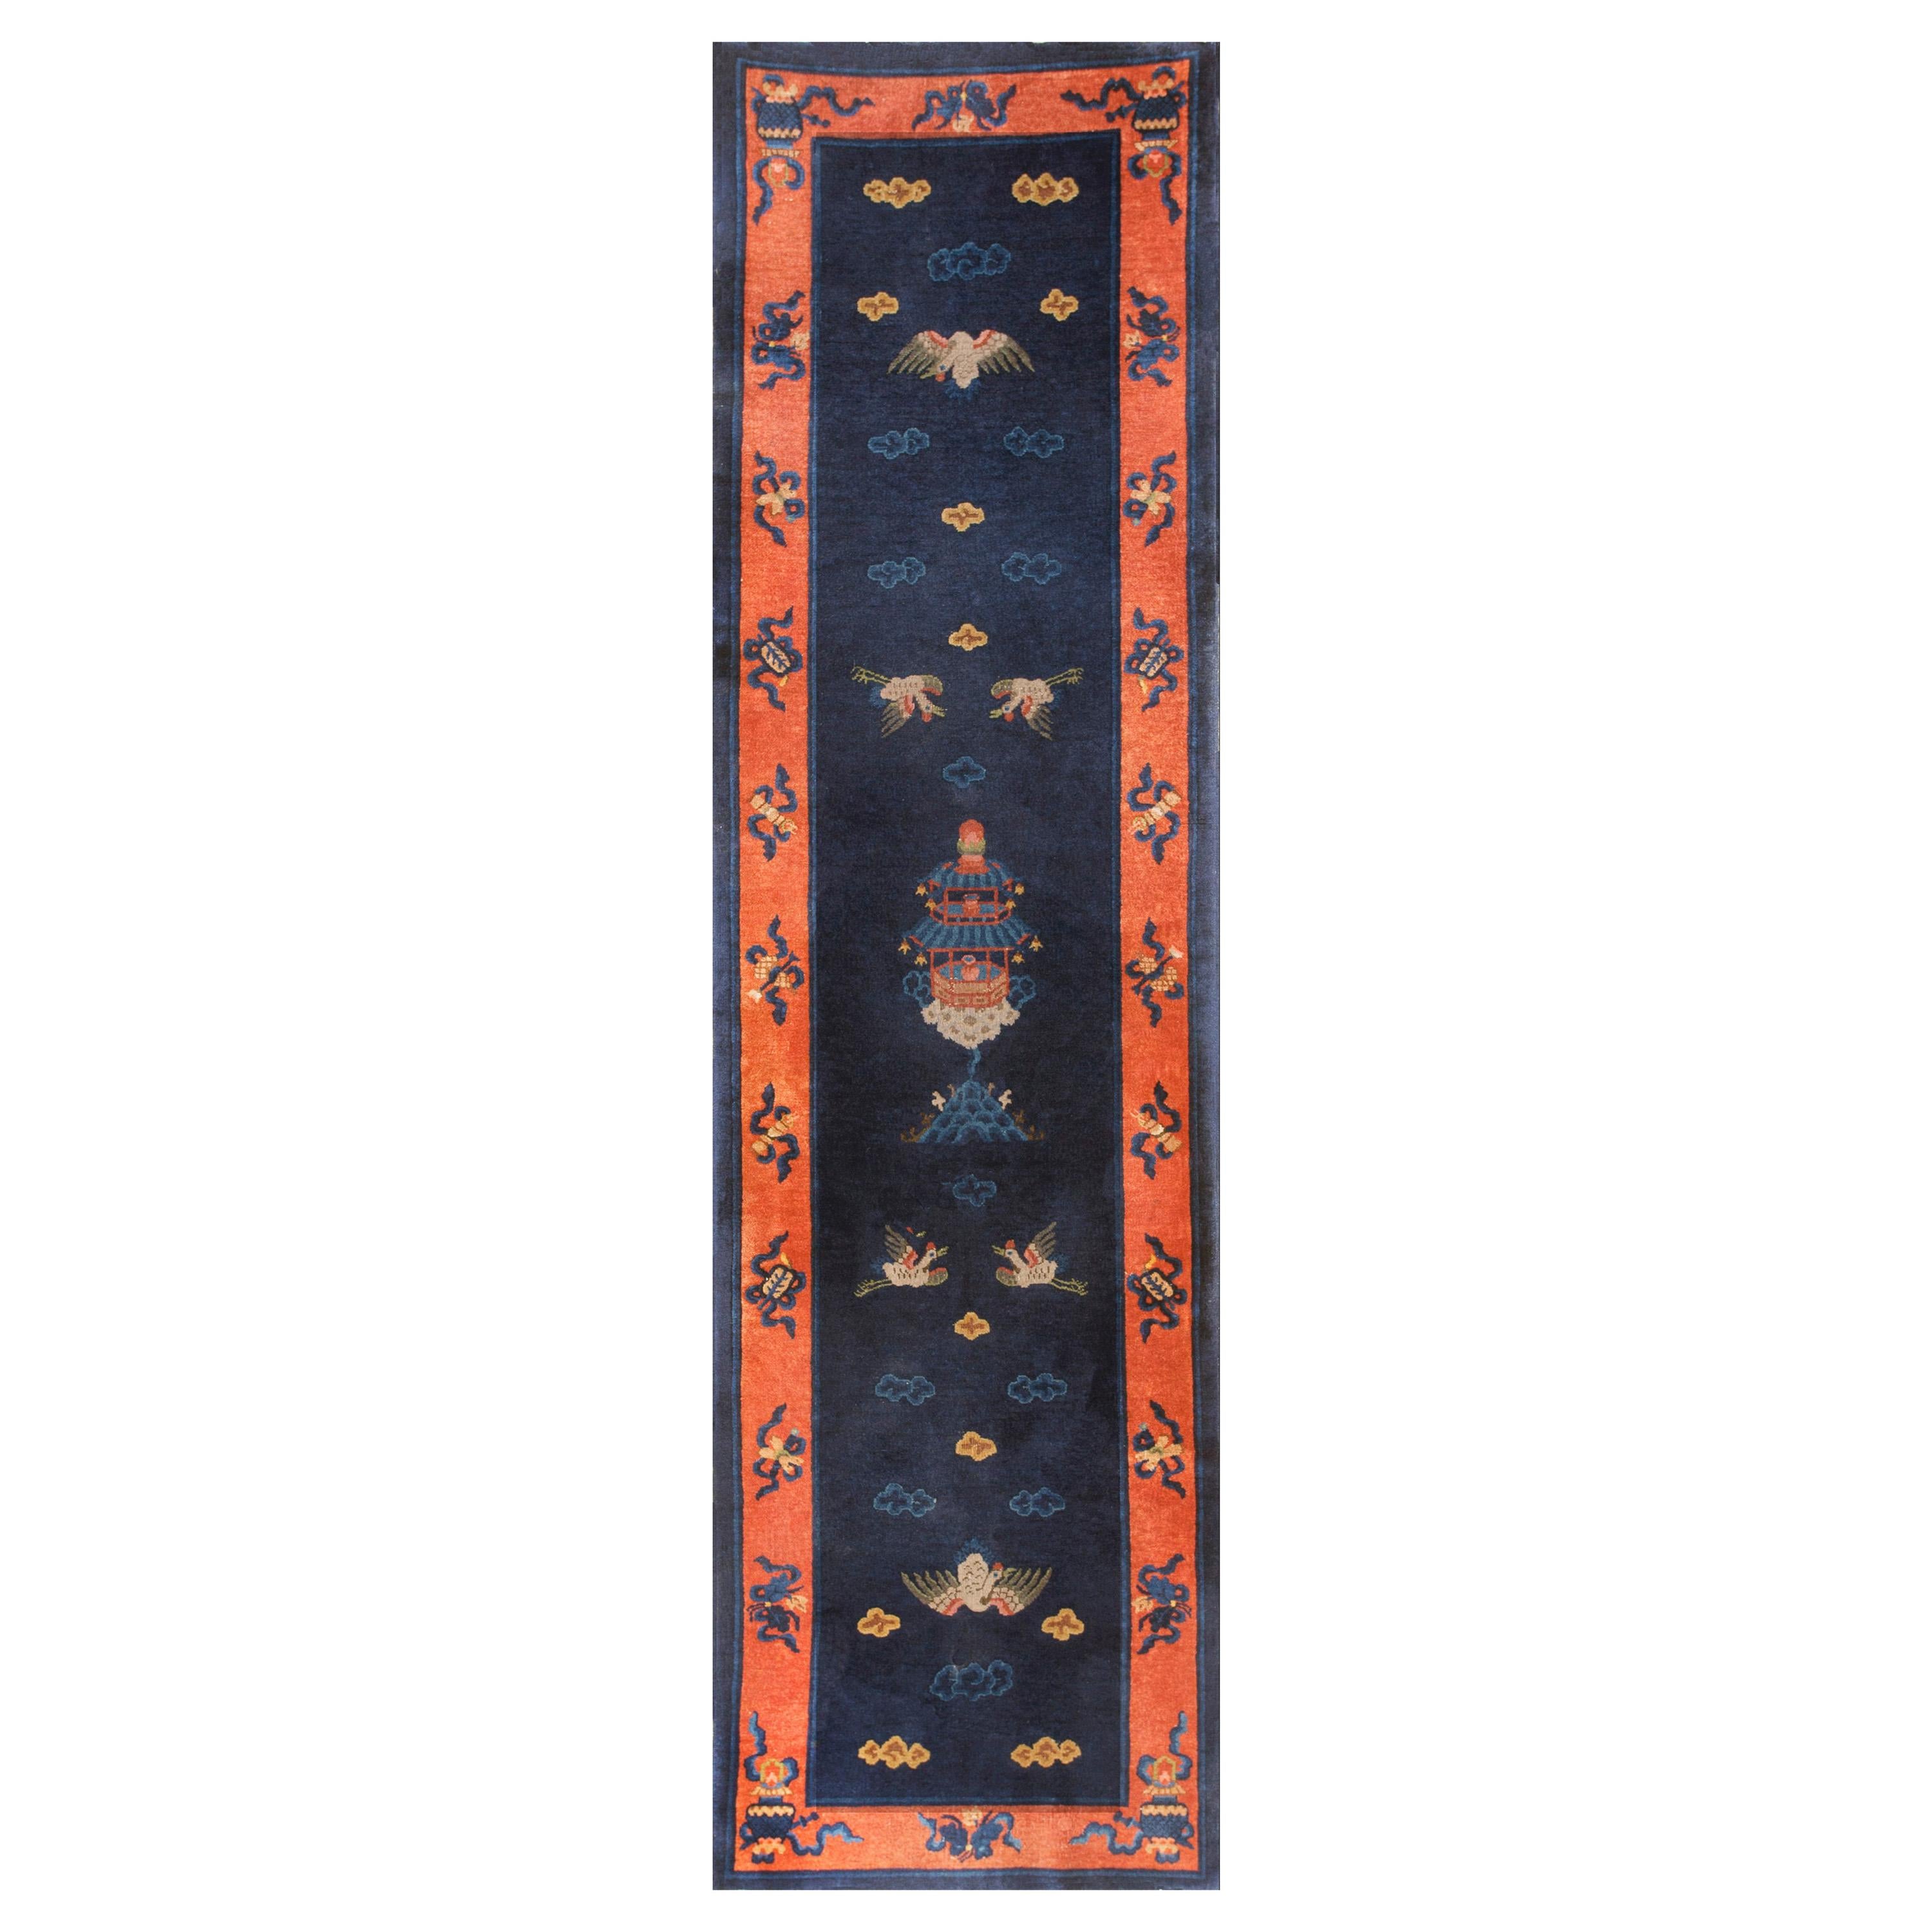 1920s Chinese Peking Carpet ( 3'2" x 11'8" - 97 x 357 )